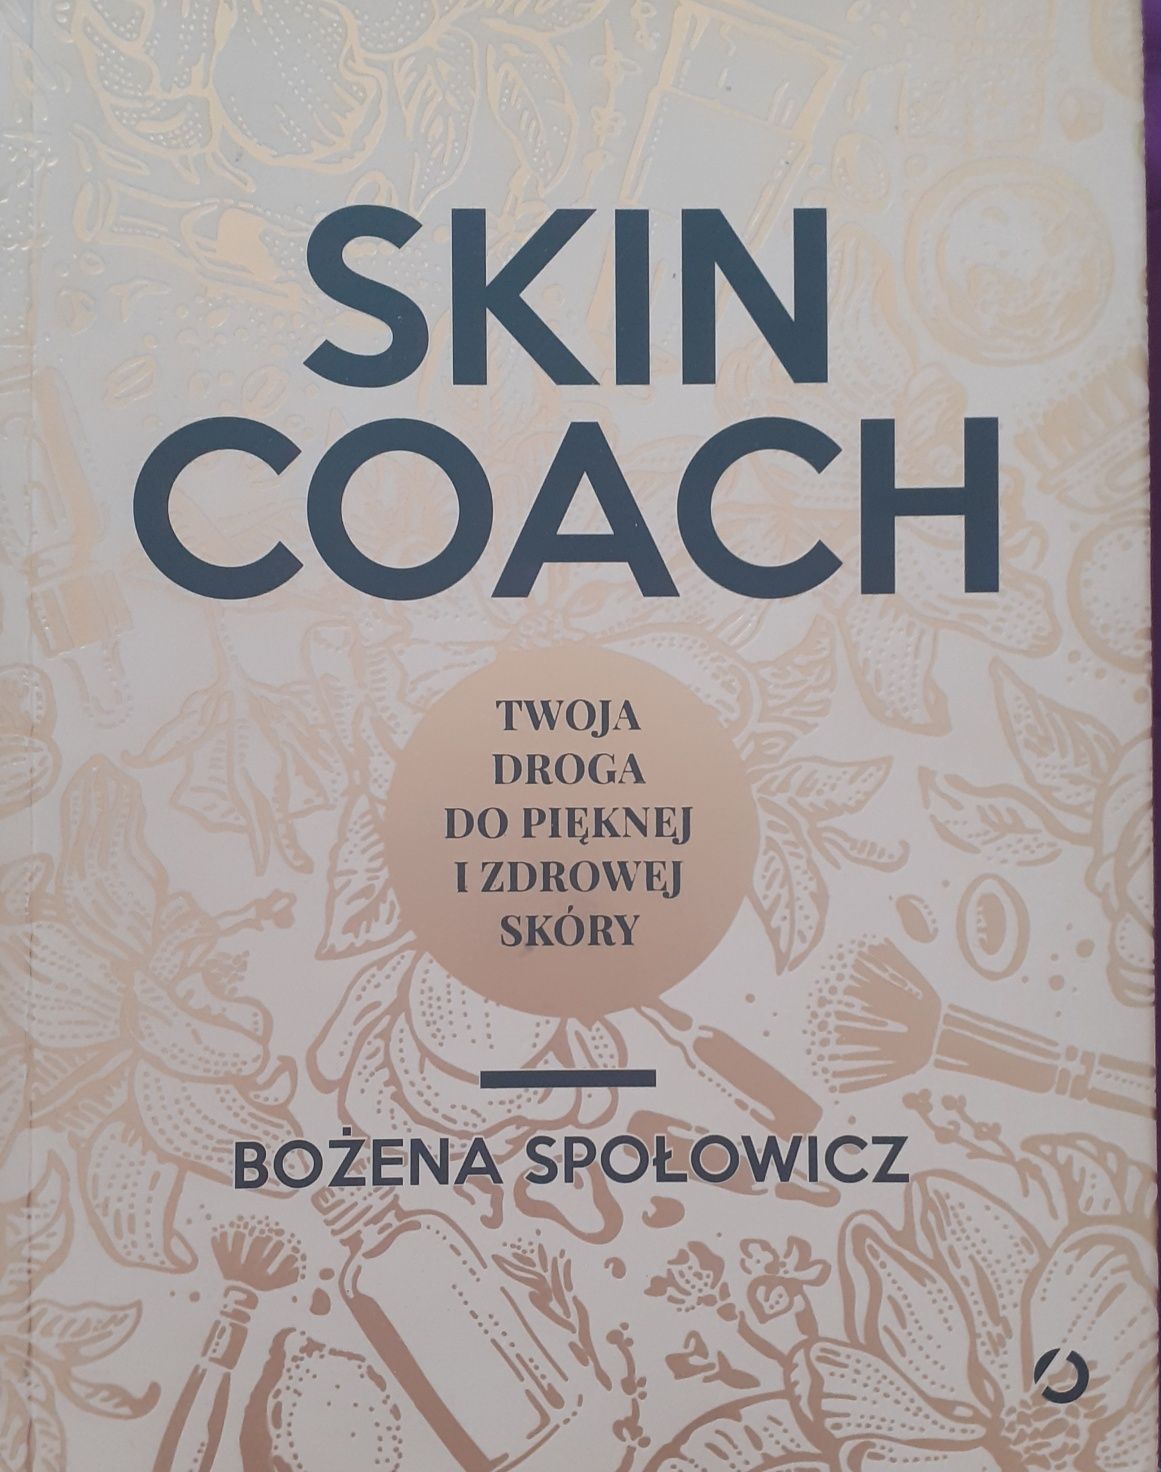 Poradnik książka Skin Coach pielęgnacja skóry, uroda